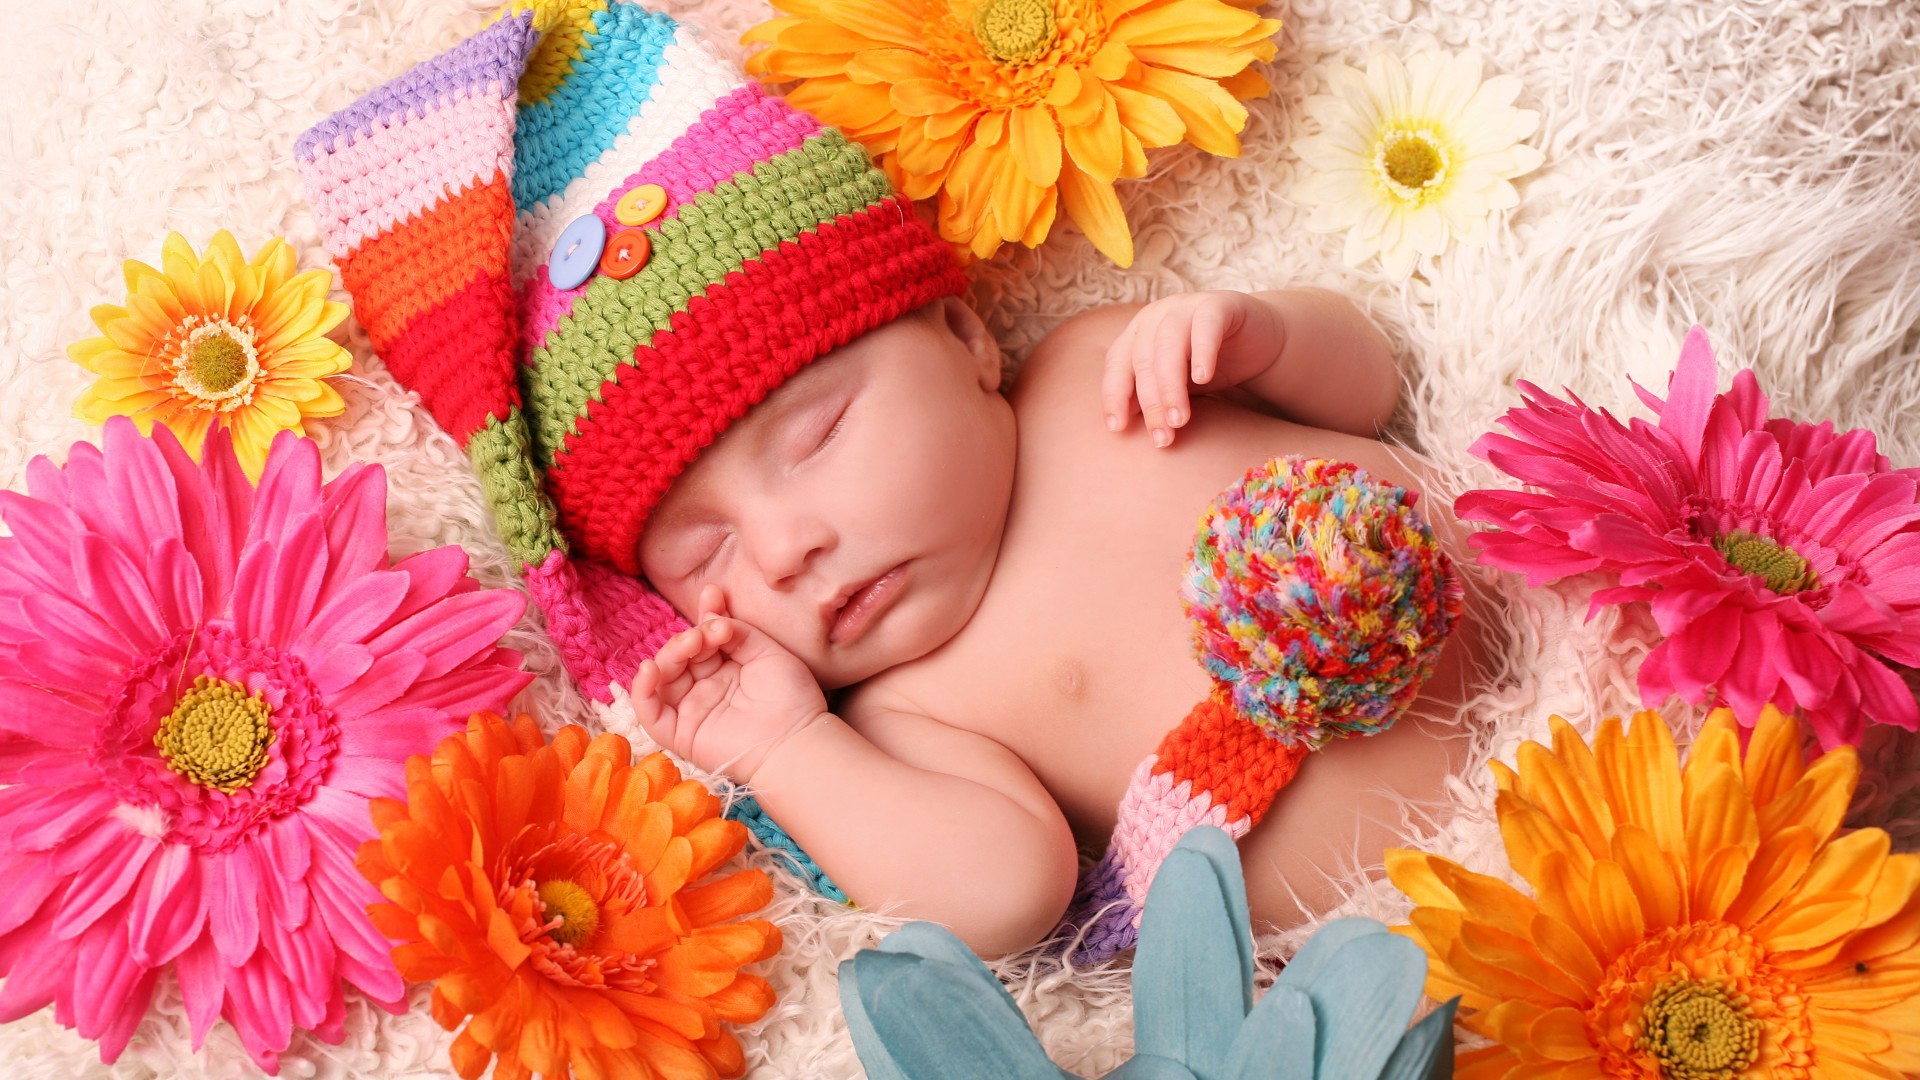 baby flowers woolly hat Wallpaper